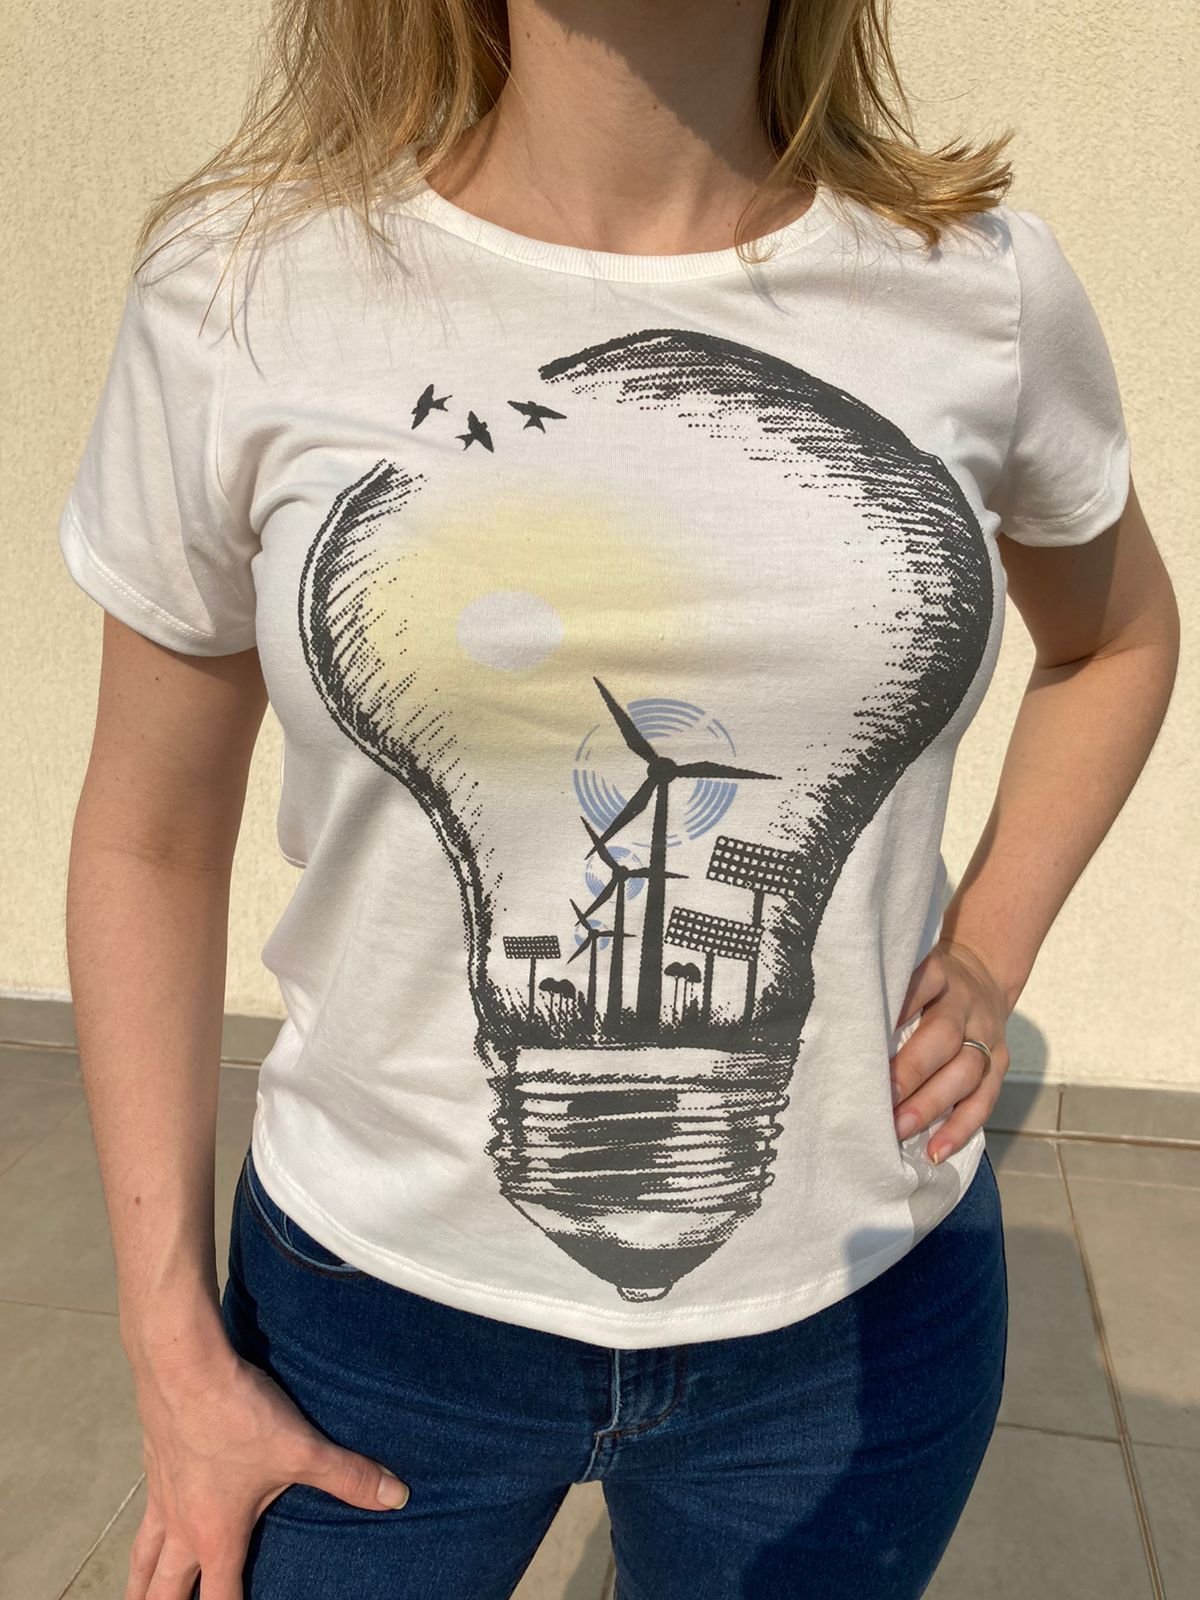 T-shirt Feminina Energia Renovável